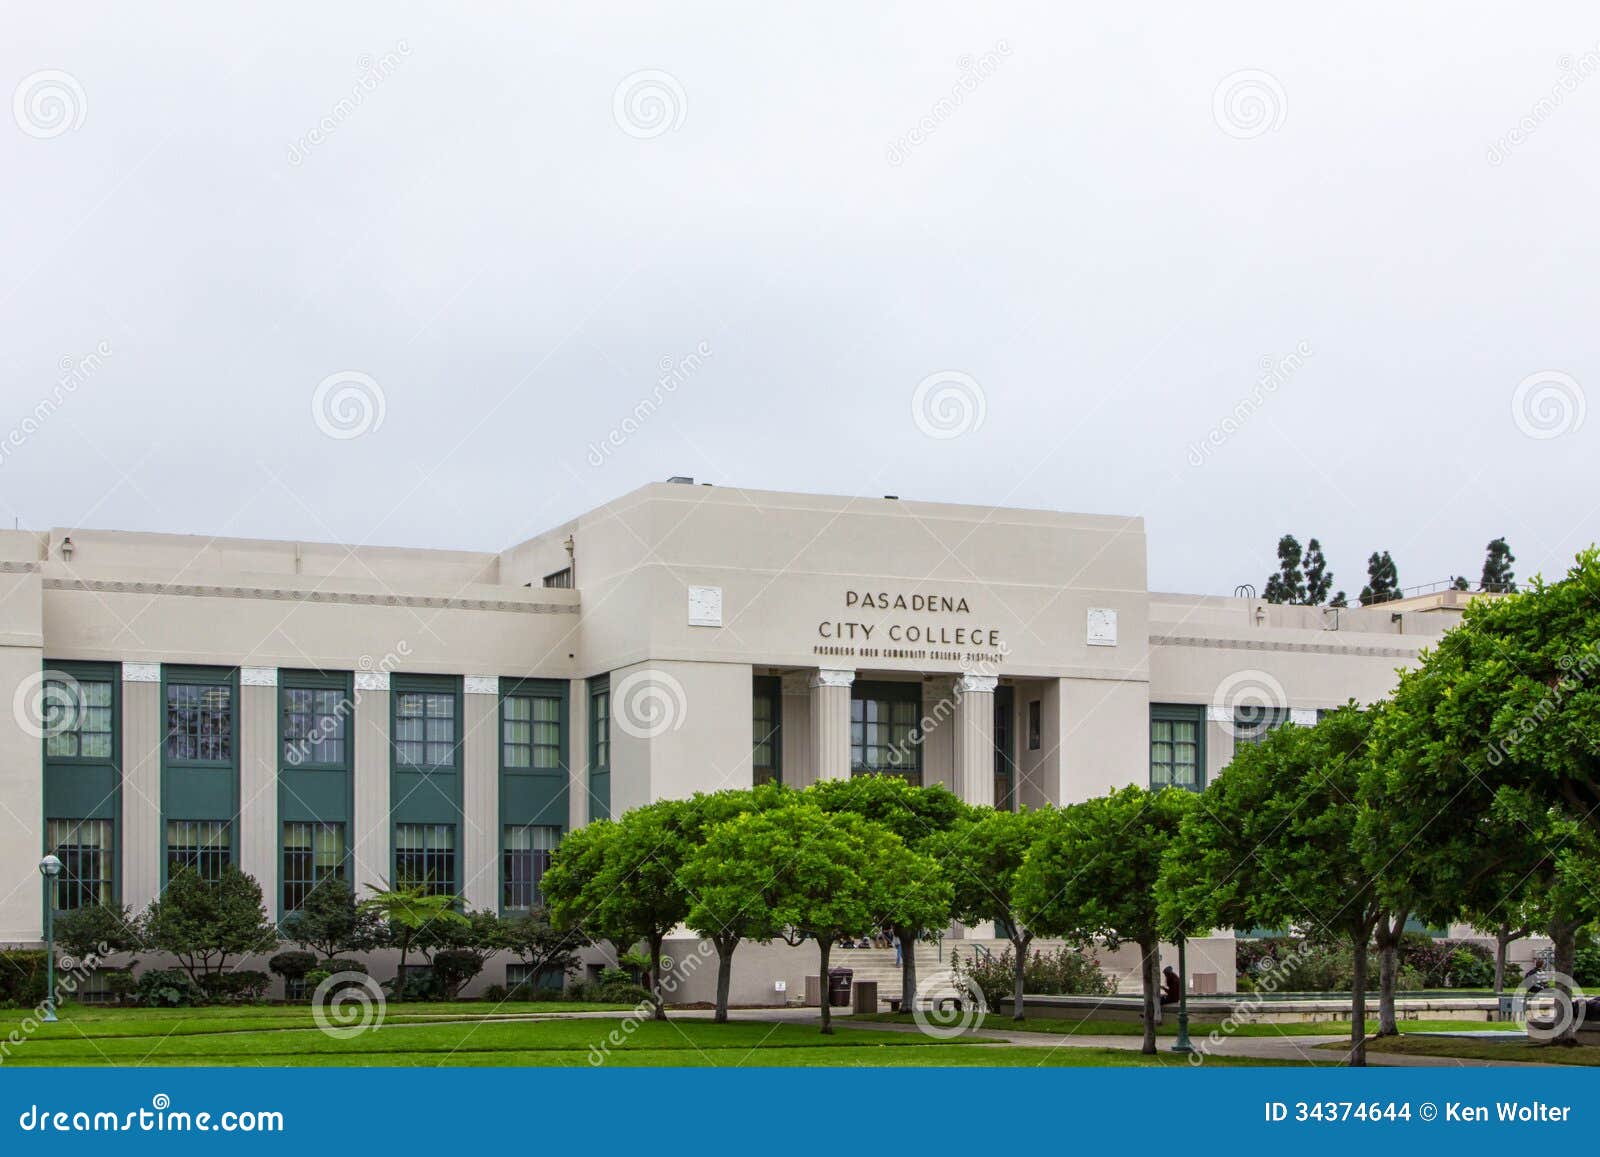 Pasadena City College editorial stock image. Image of city - 34374644